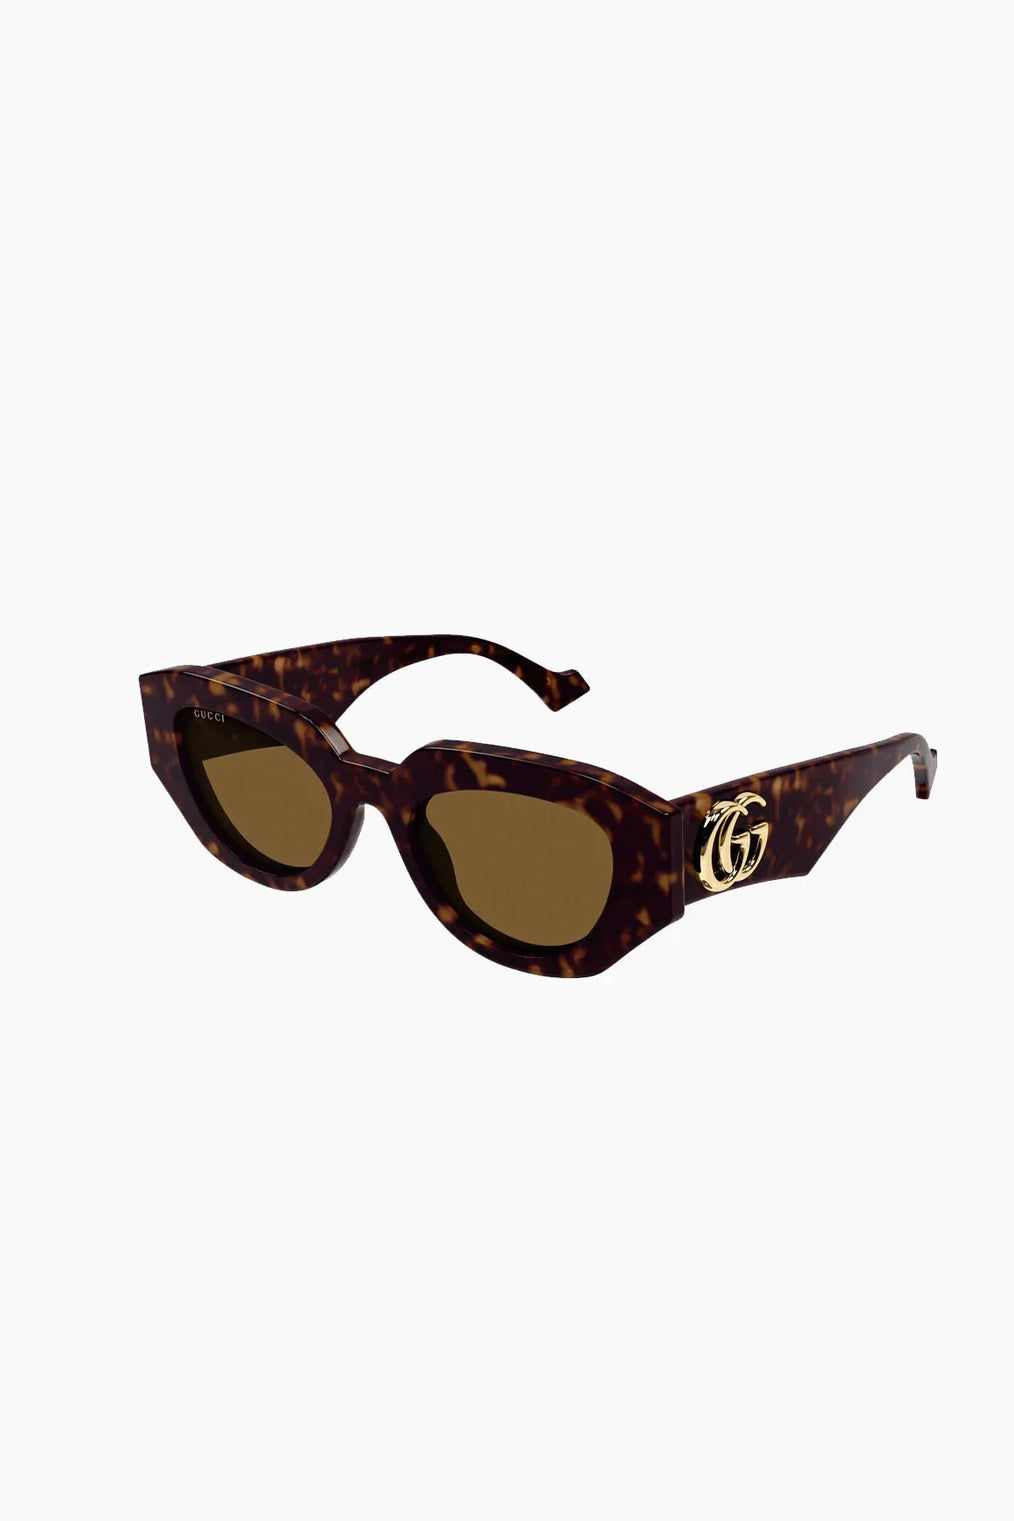 Gucci Oversized Sunglasses Tortoise GG1421S002